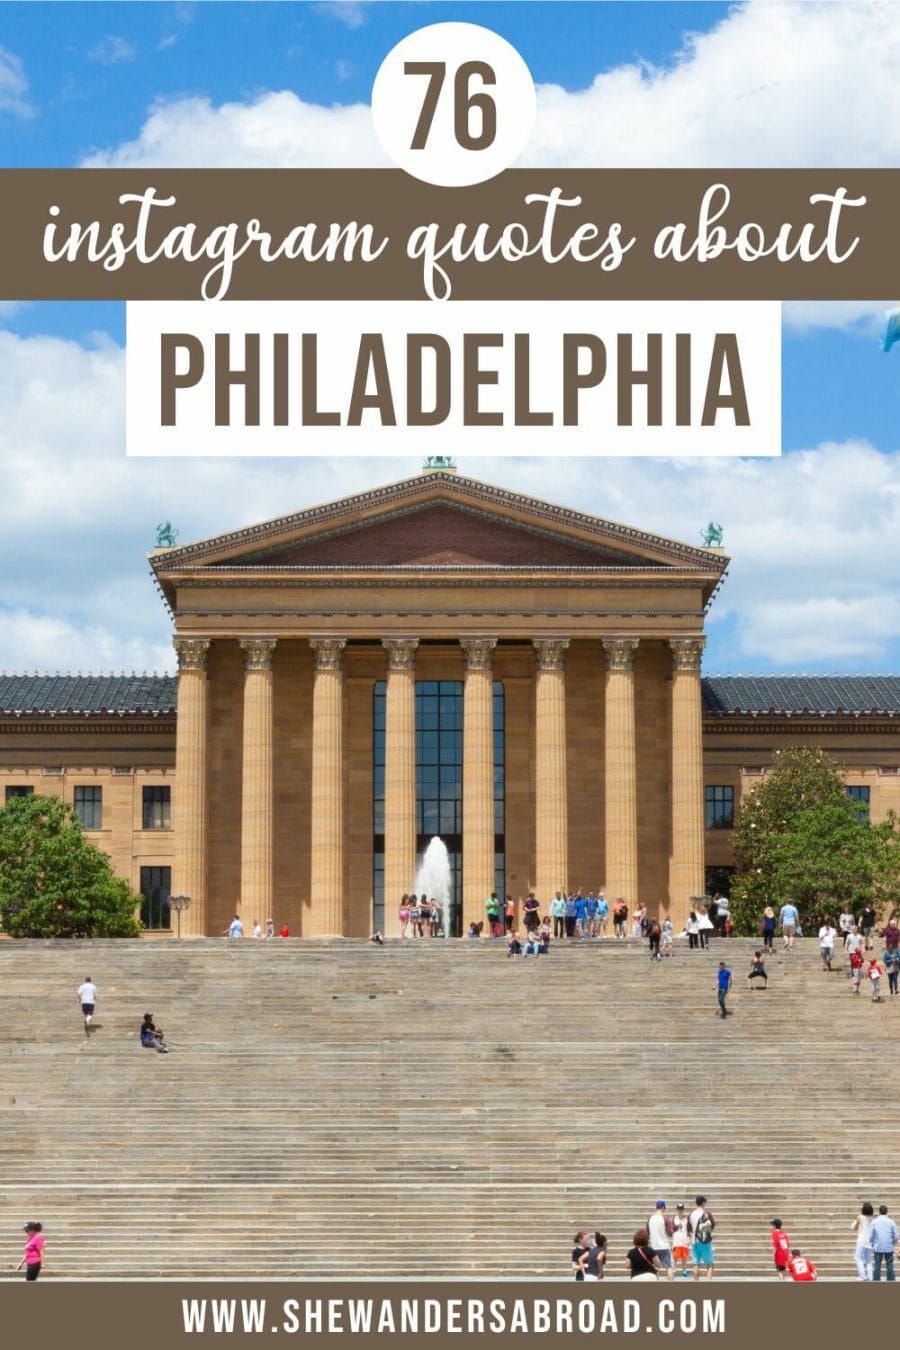 76 Philadelphia Quotes & Captions for Instagram